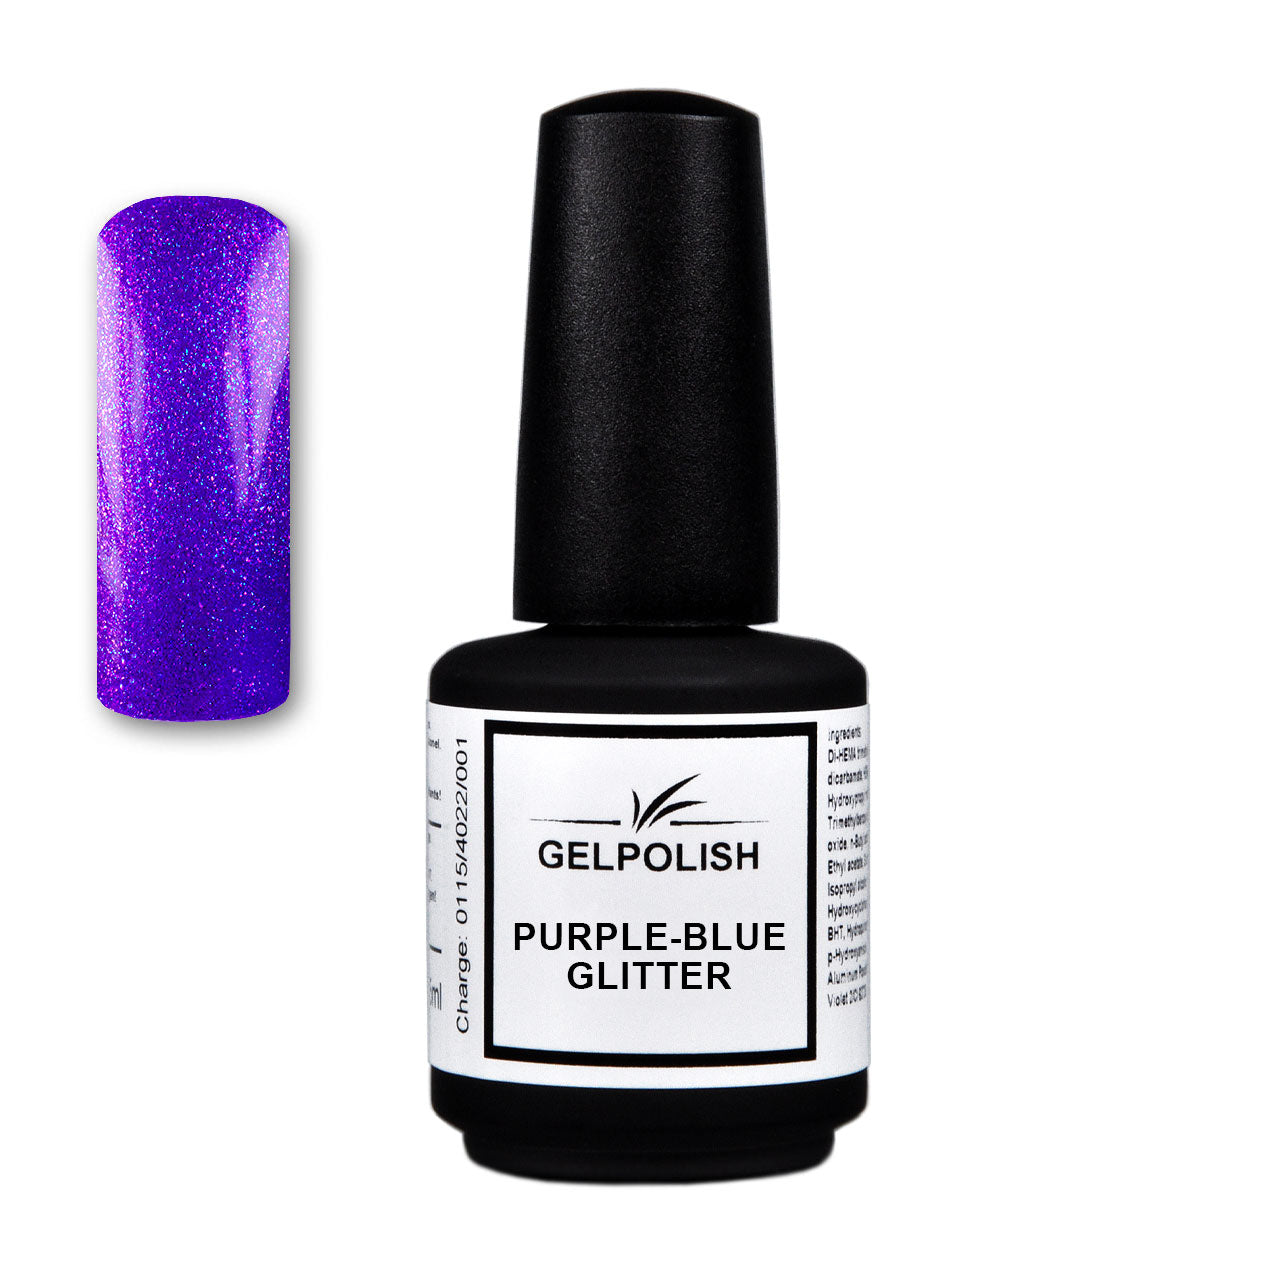 Gelpolish VSP Purple-Blue Glitter